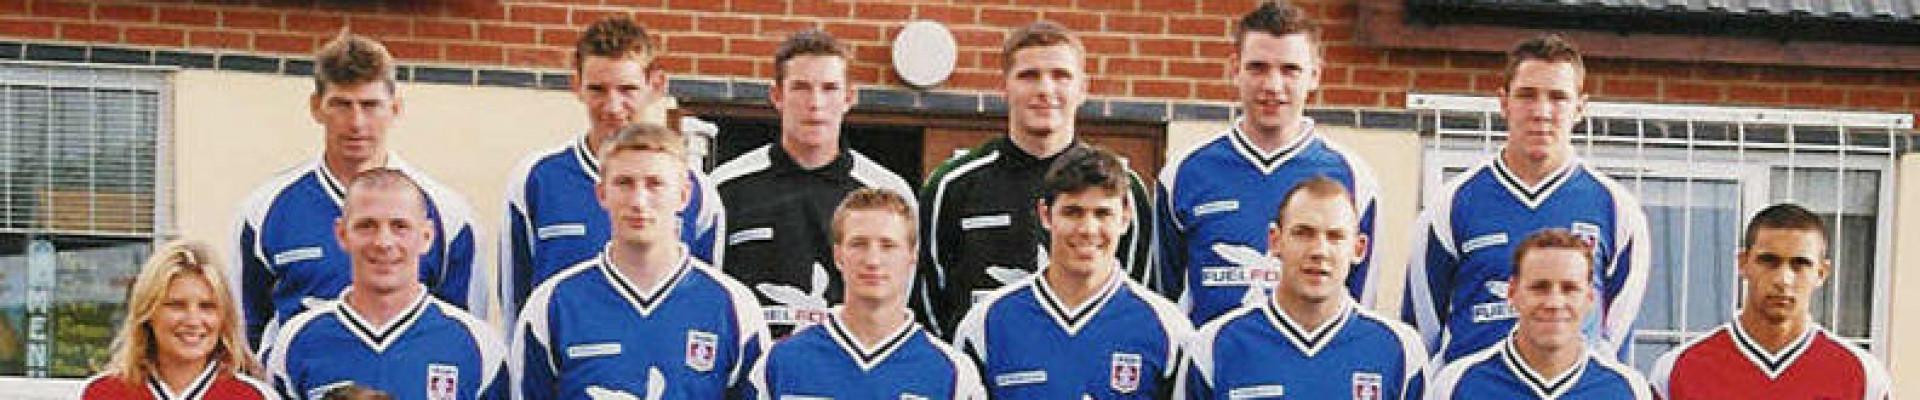 Team Photo 2002/03 Season